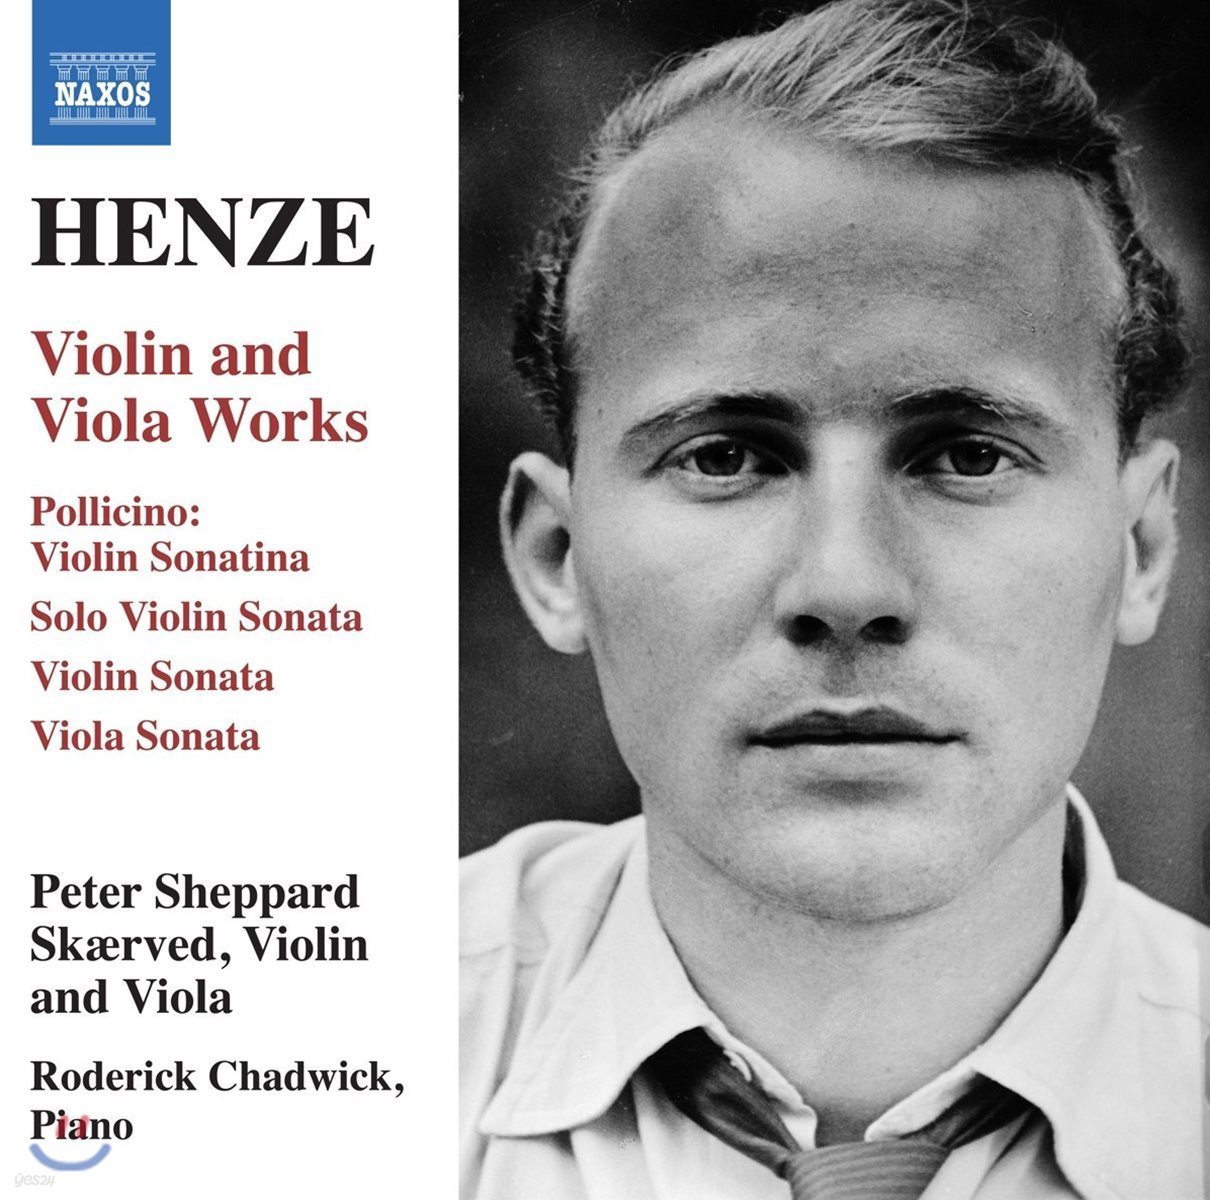 Peter Sheppard Skaerved 한스 베르너 헨체 : 바이올린과 비올라를 위한 작품집 (Hans Werner Henze: Violin and Viola Works)